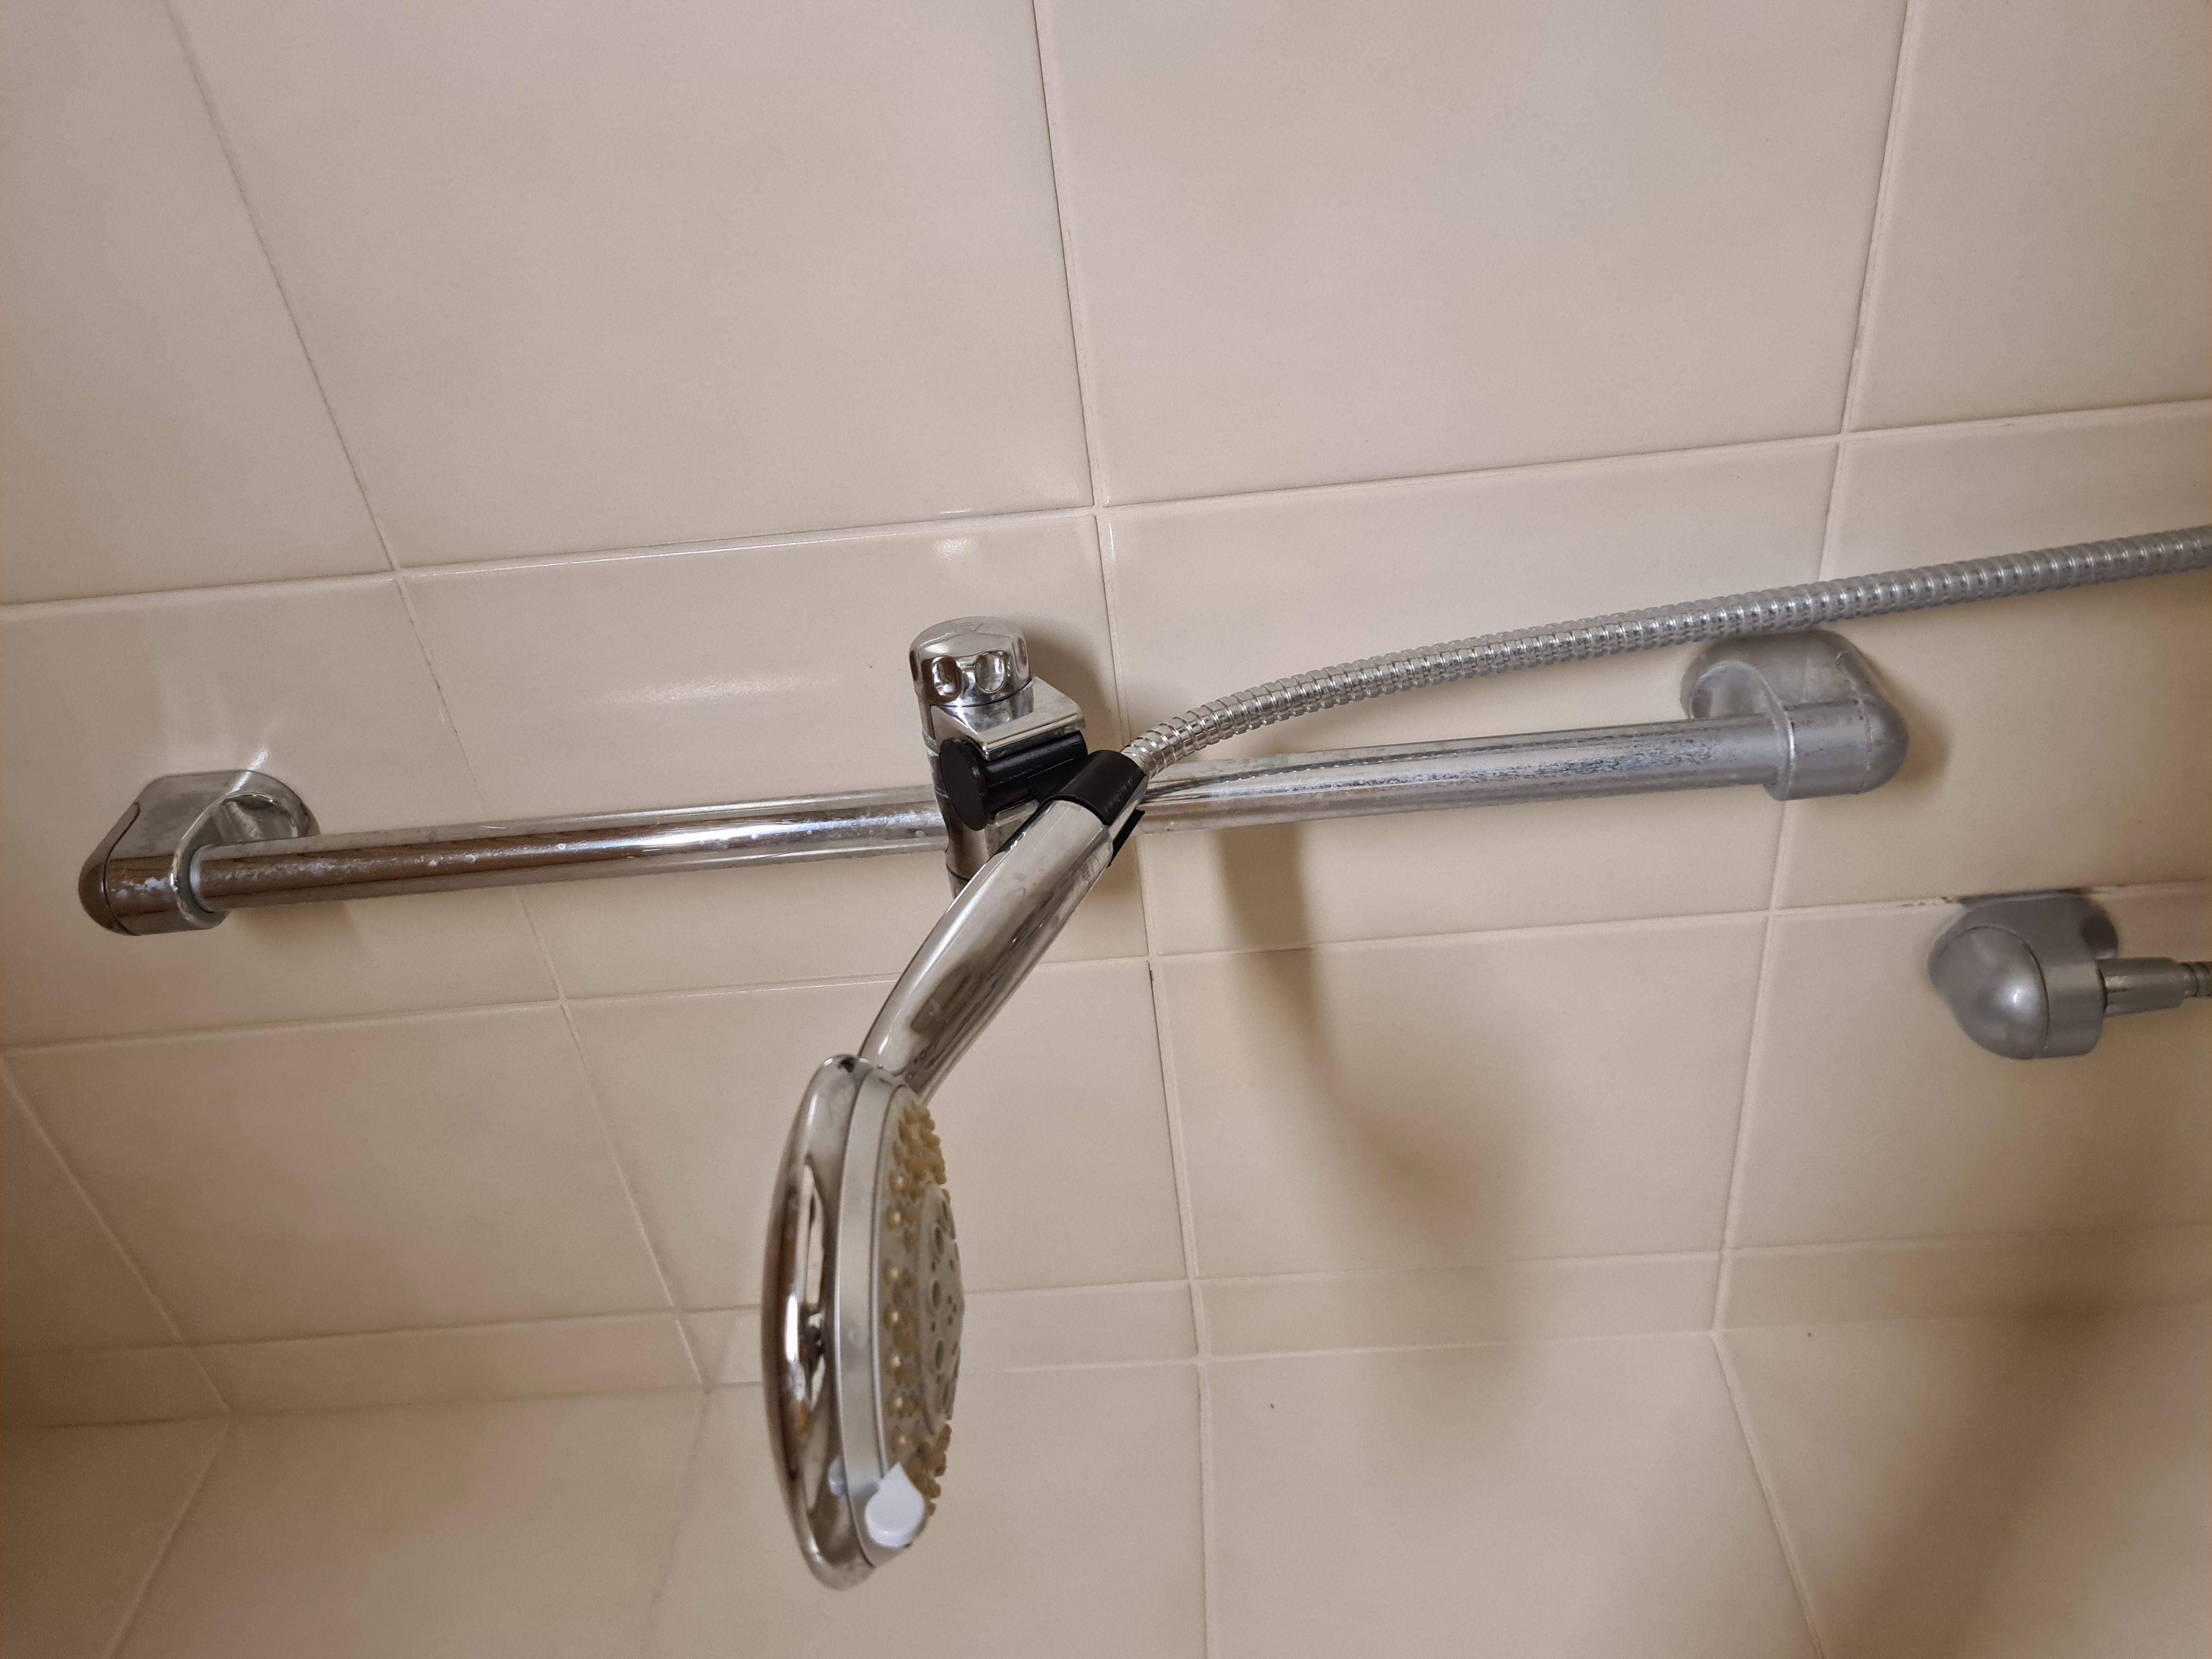 Shower head adapter (for small gap holder)